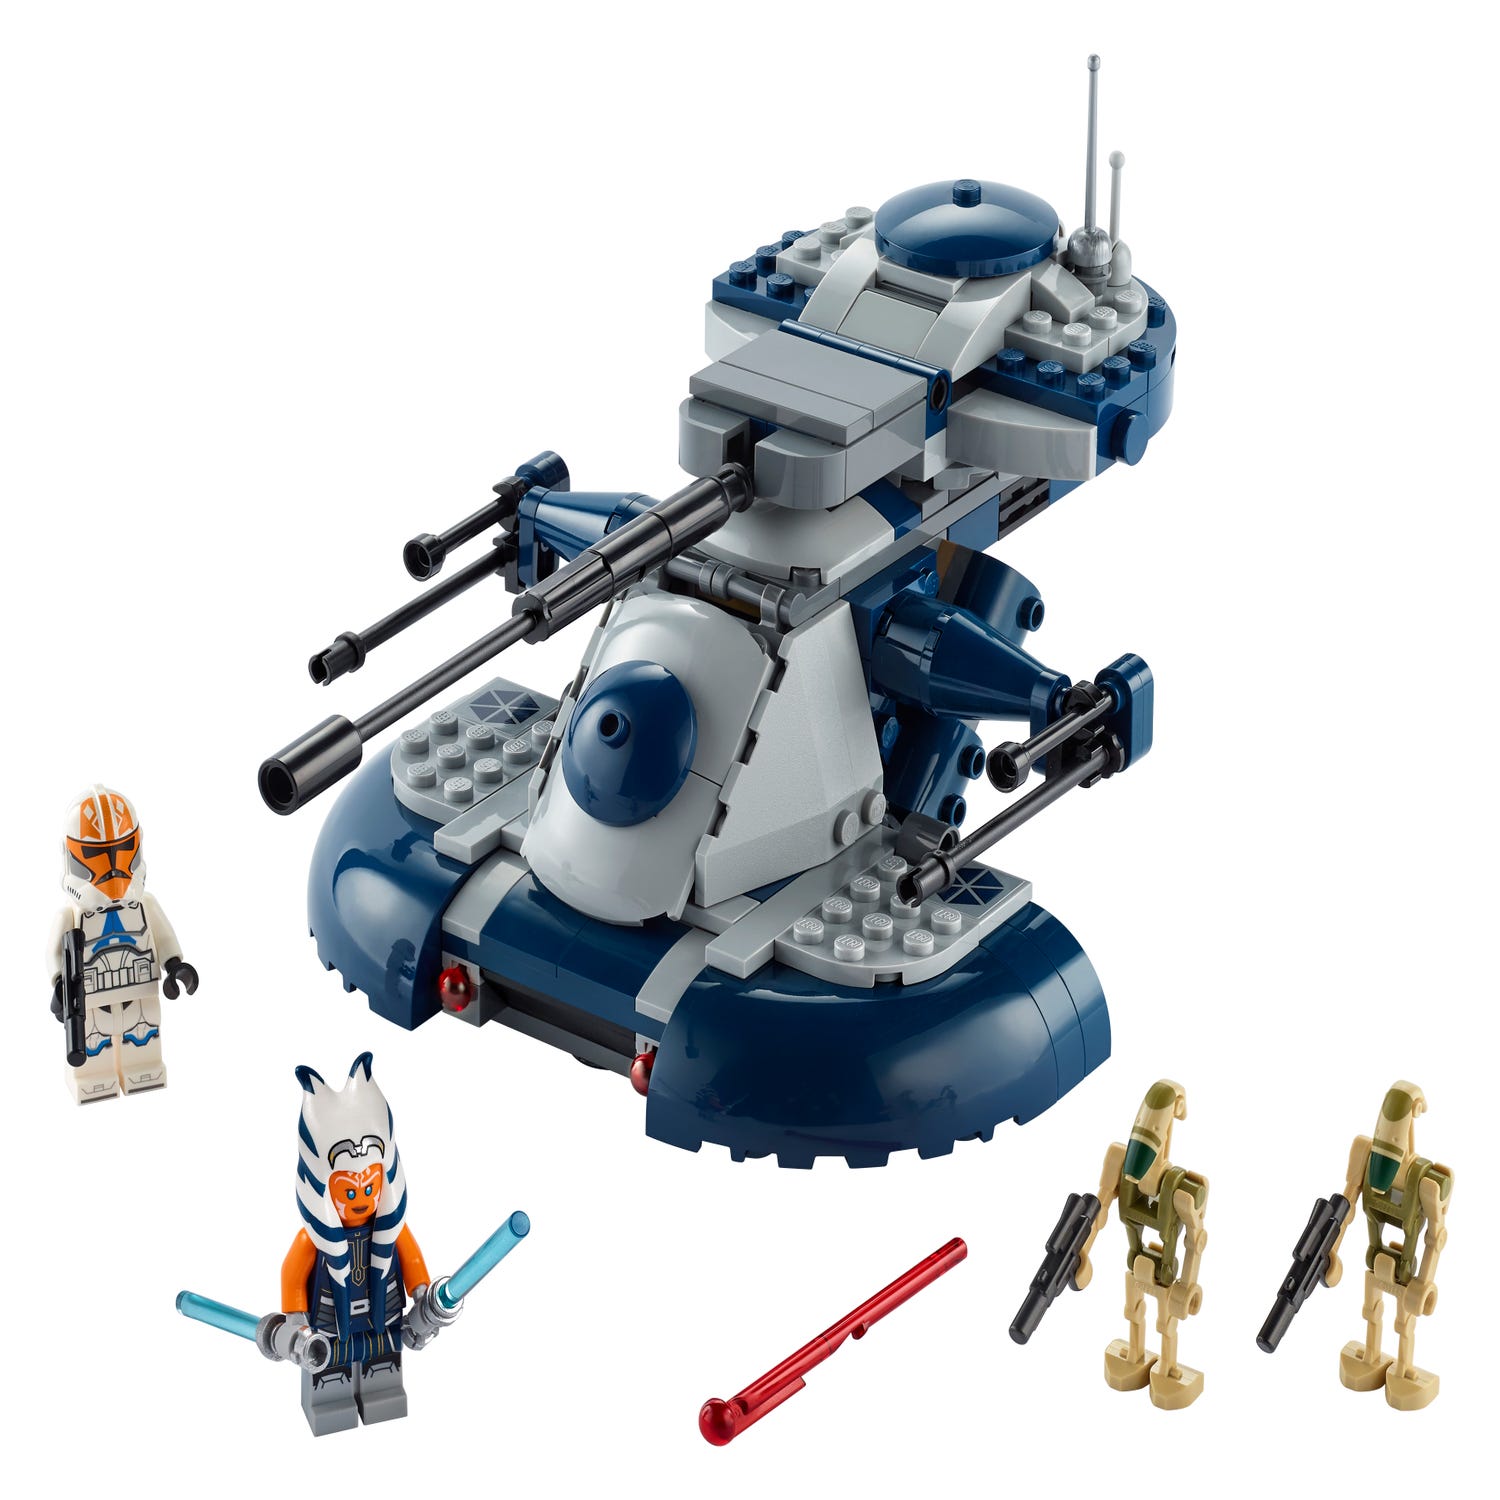 Lego War Tank - atana studio, Lego War Tank guerre sand des…